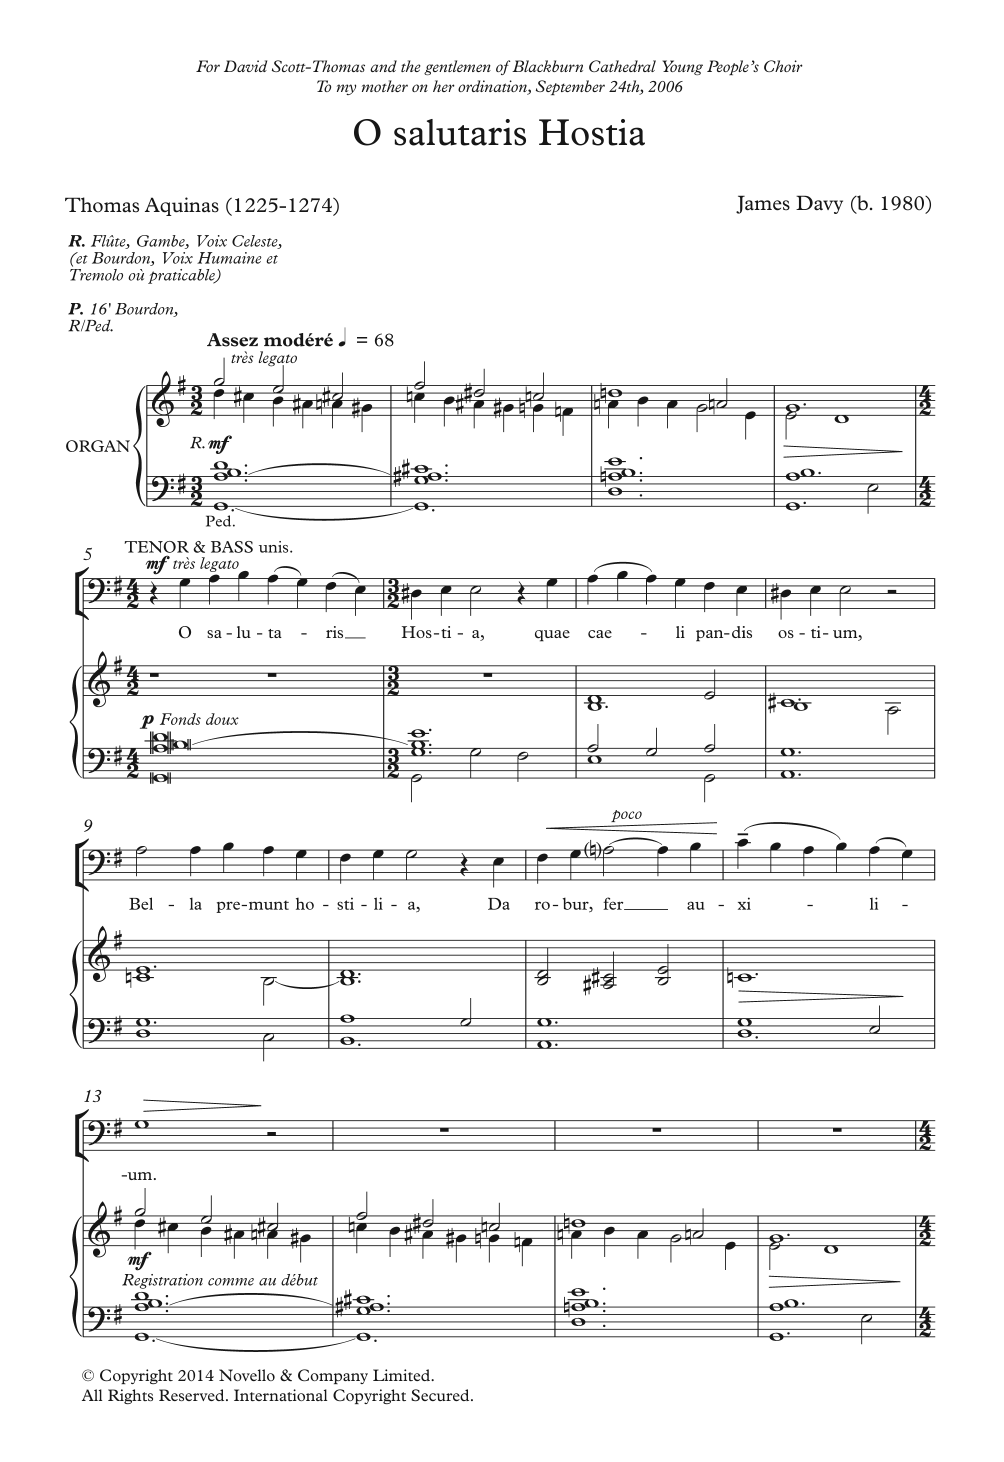 James Davy O Salutaris Hostia sheet music notes and chords arranged for Choir